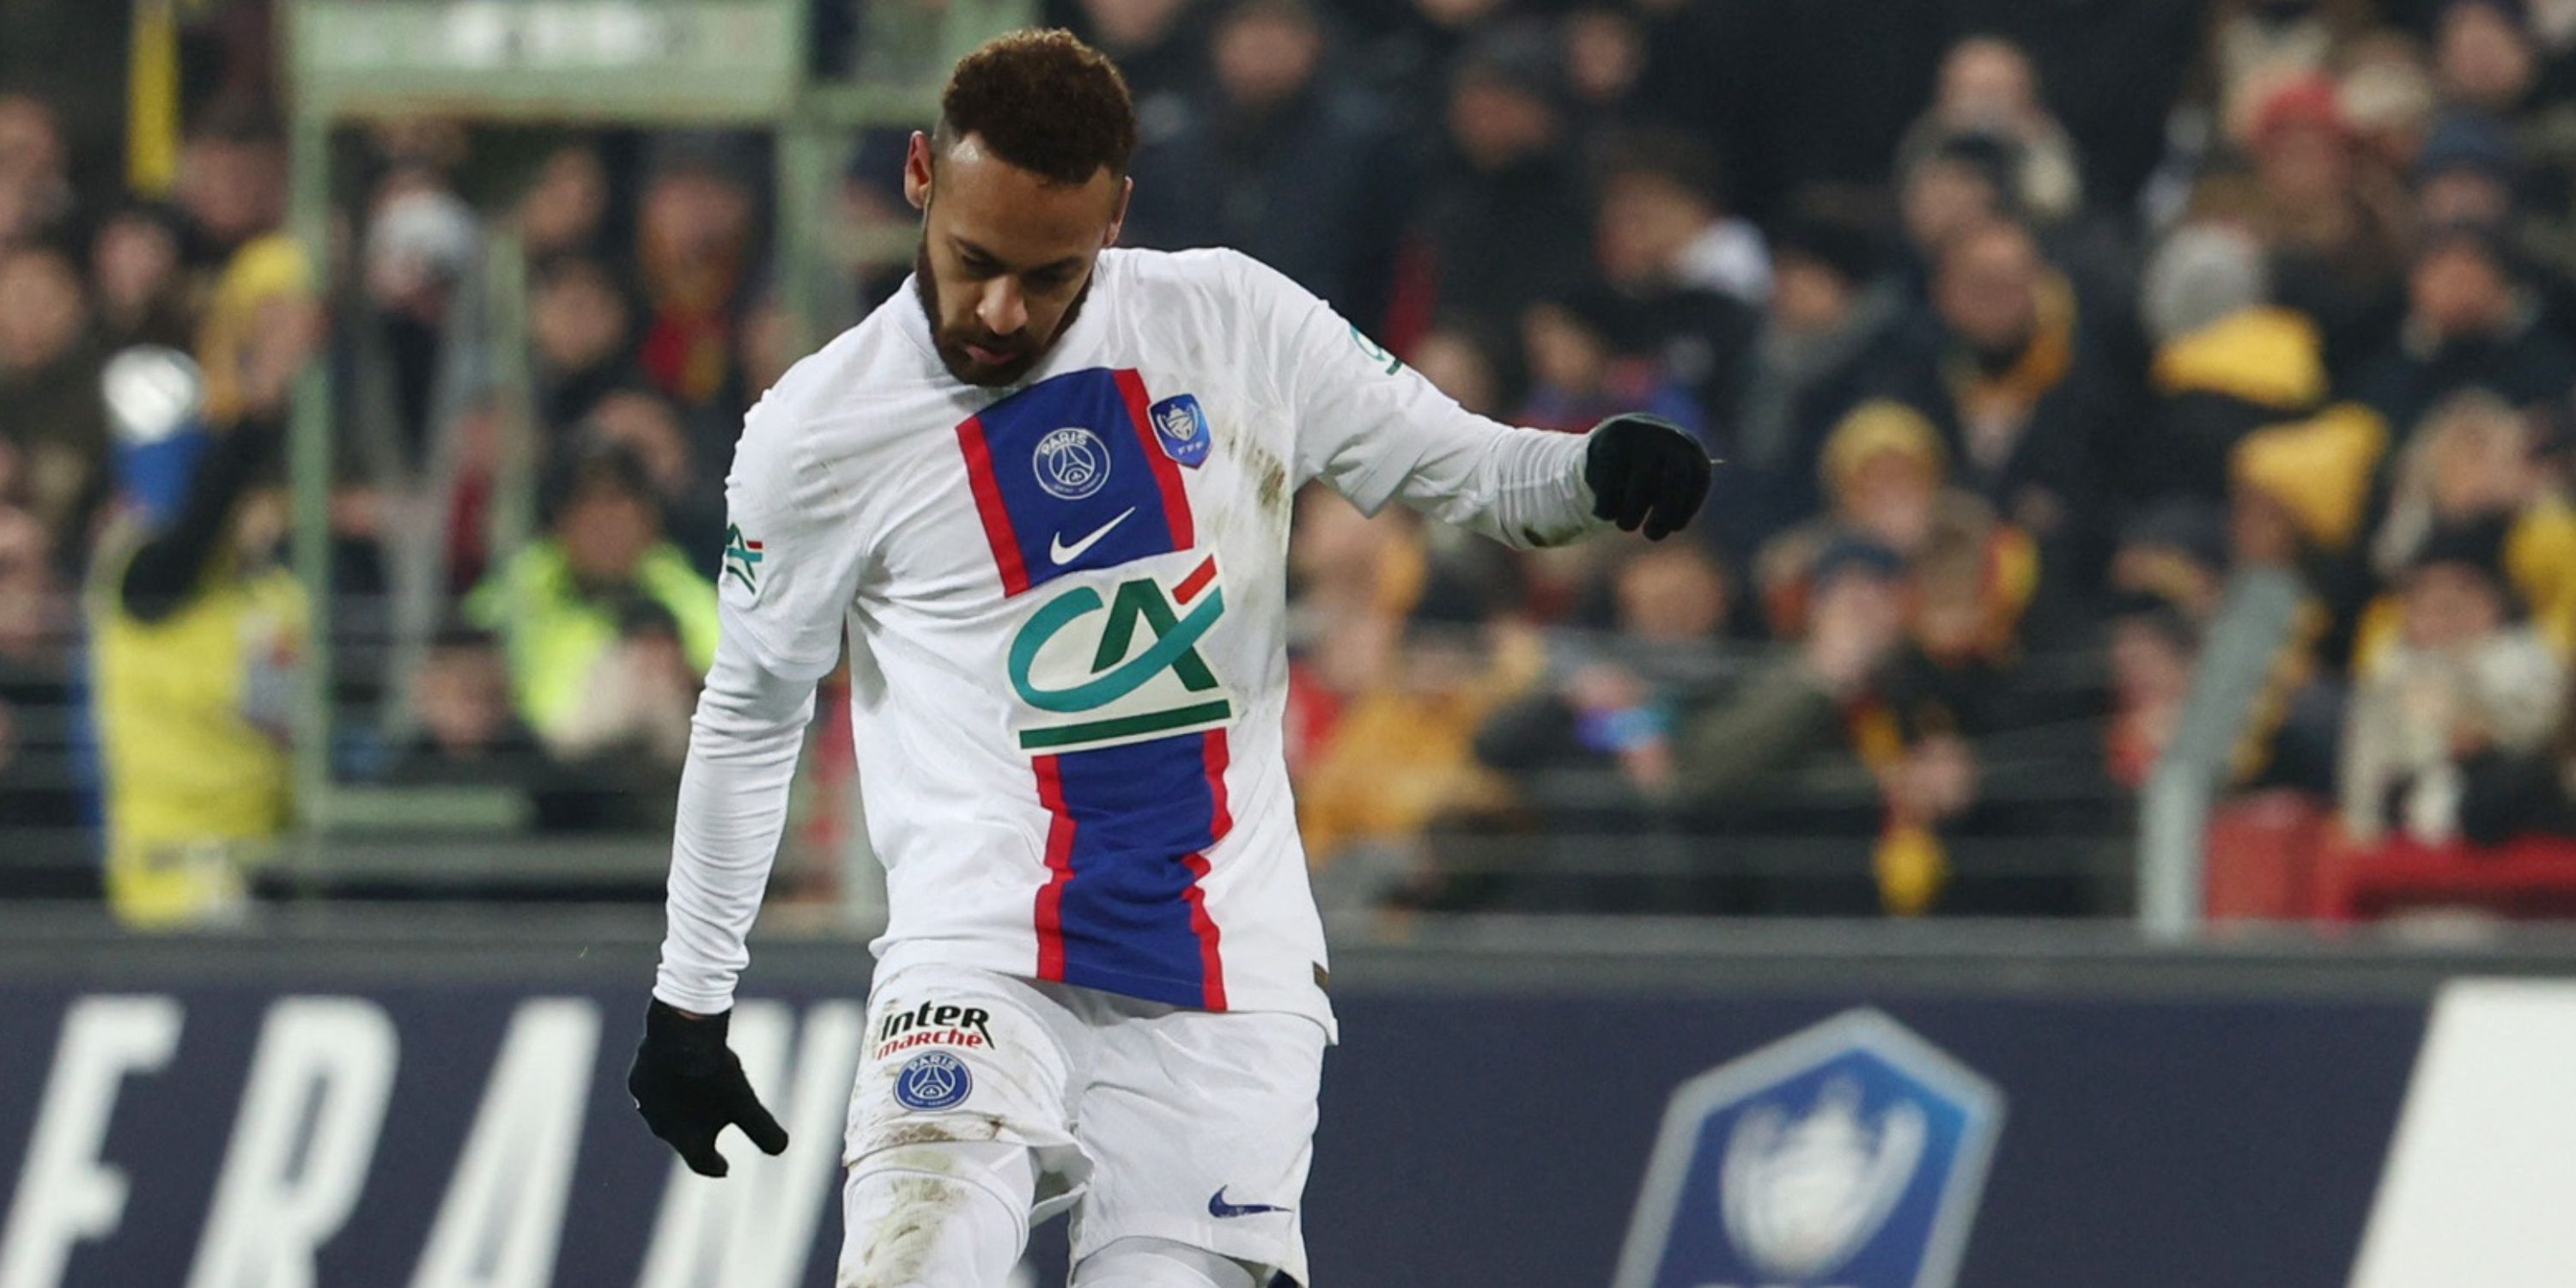 Man Utd: Neymar move depends on ownership situation